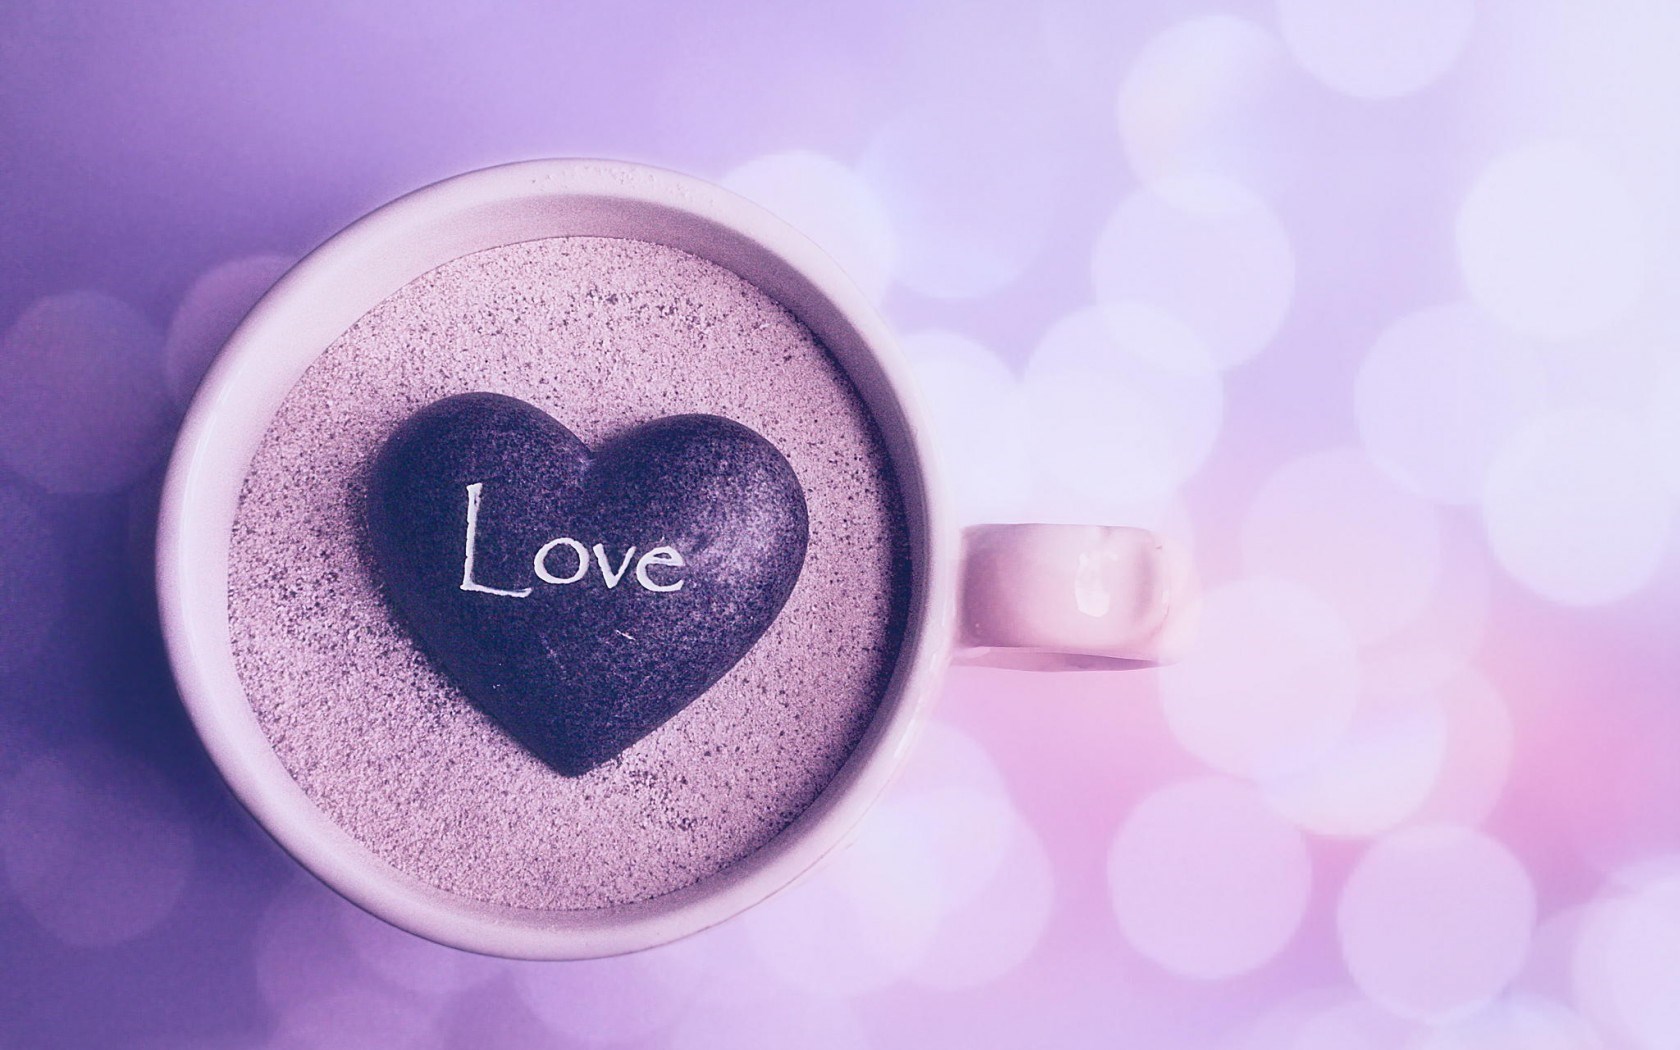 Cup Mug Sand Stone Heart Inscription Love Mood